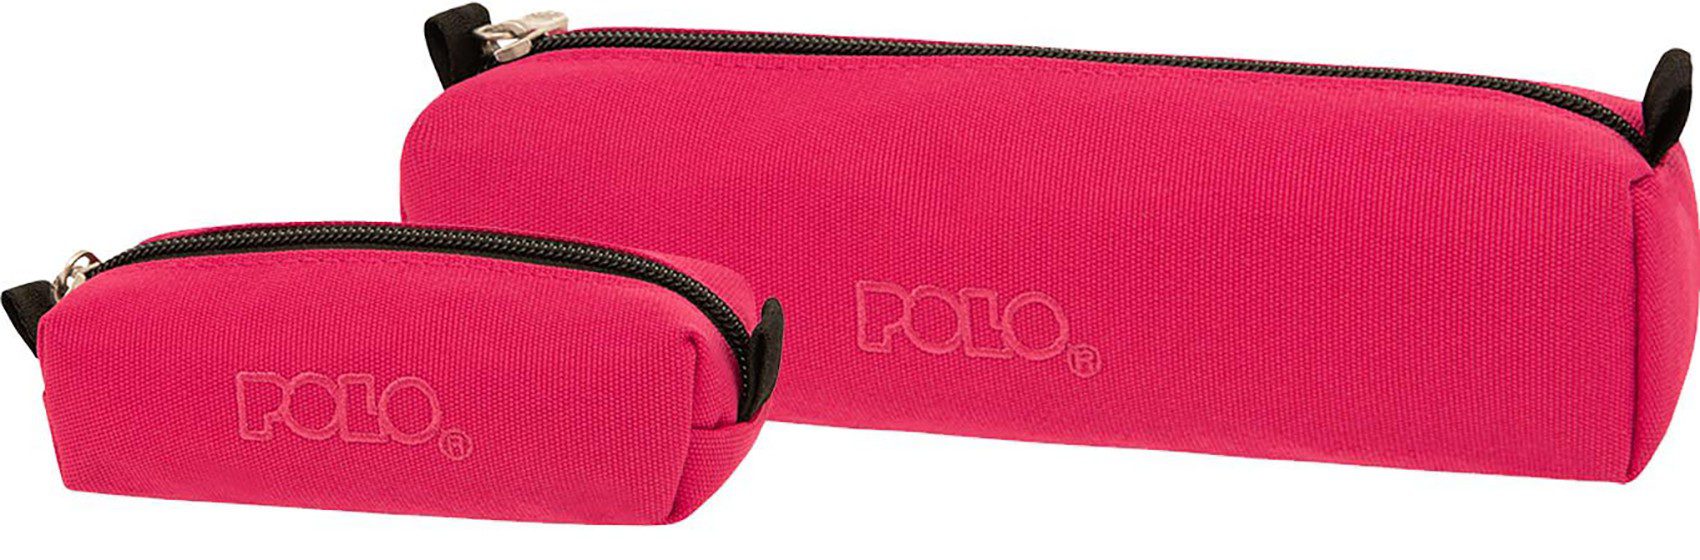 Polo Κασετινα Wallet Cord Φουξια 2023